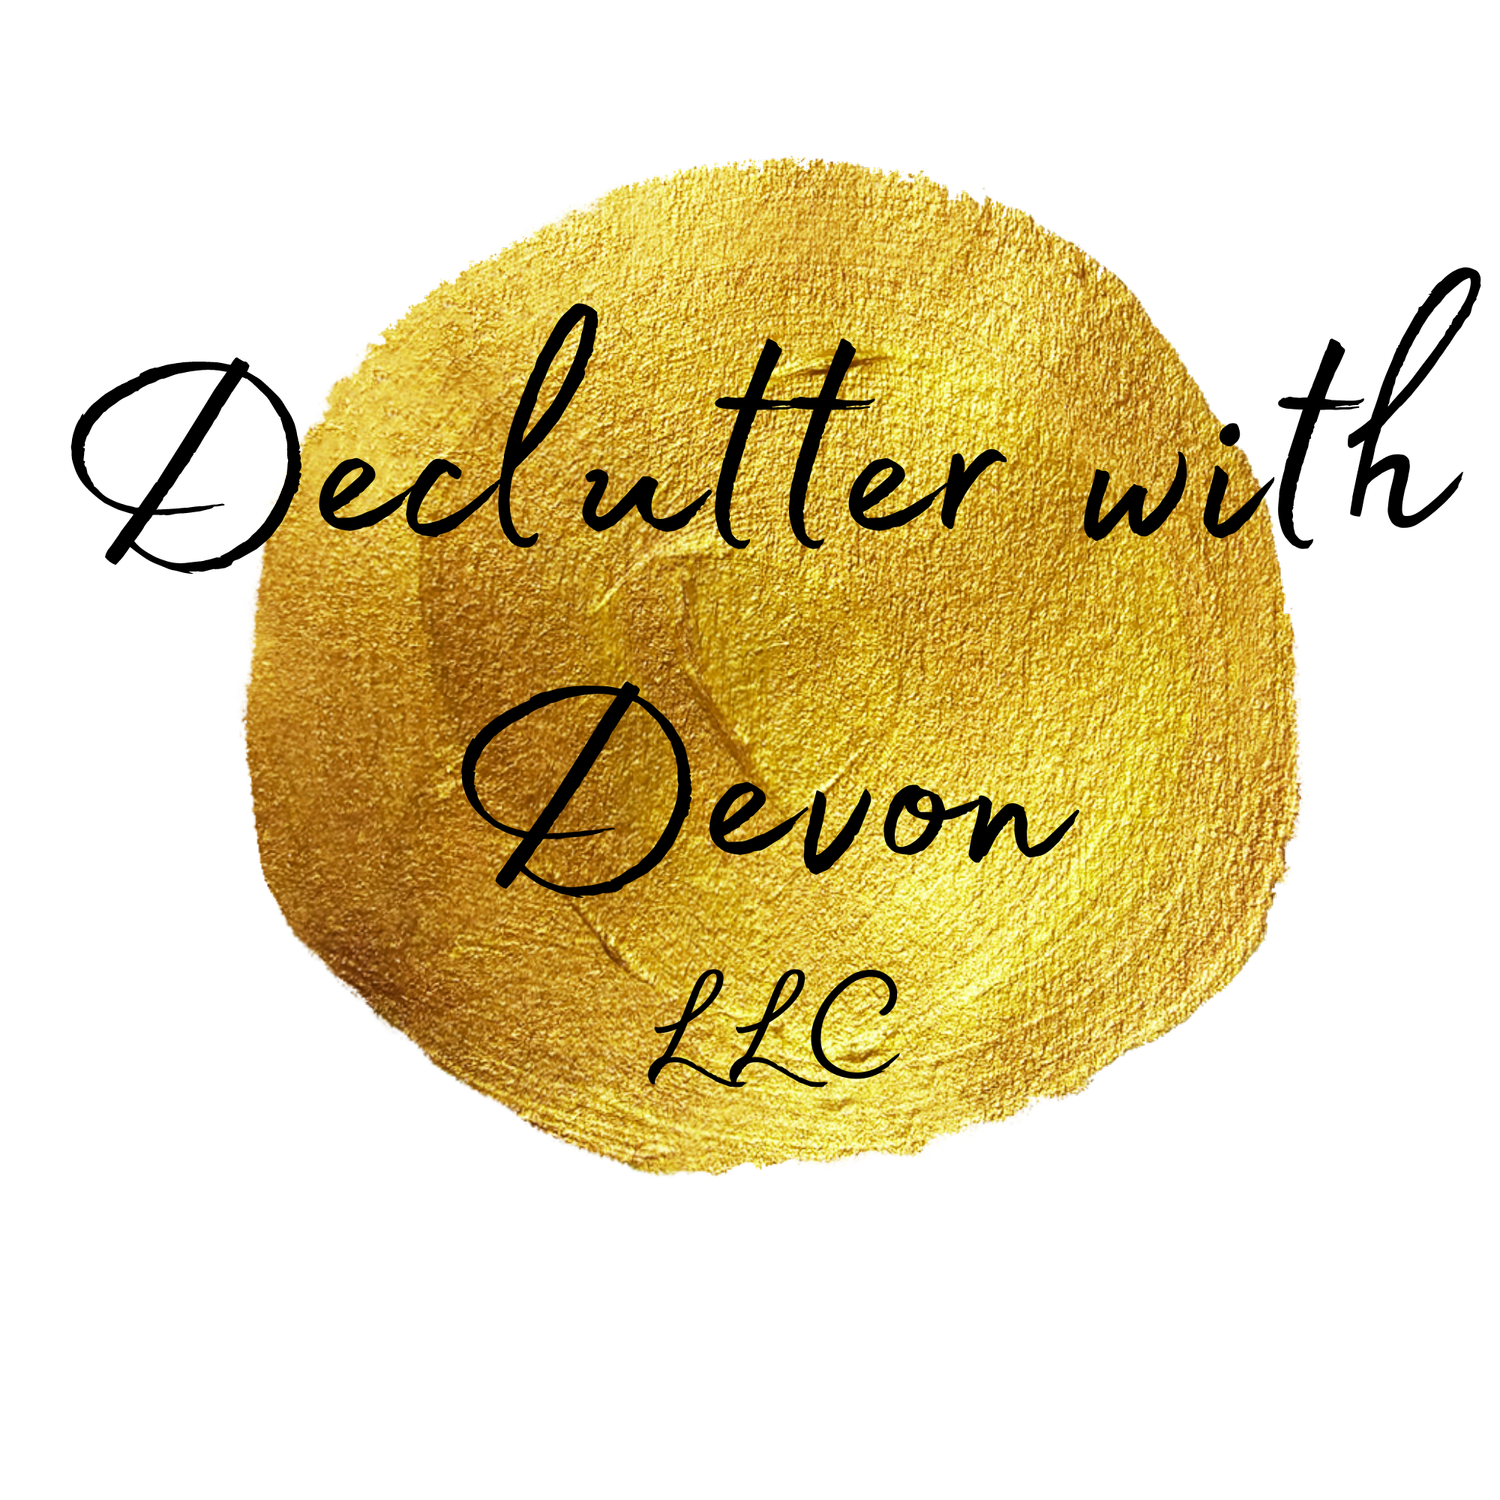 Declutter with Devon LLC - Professional Organizing Services